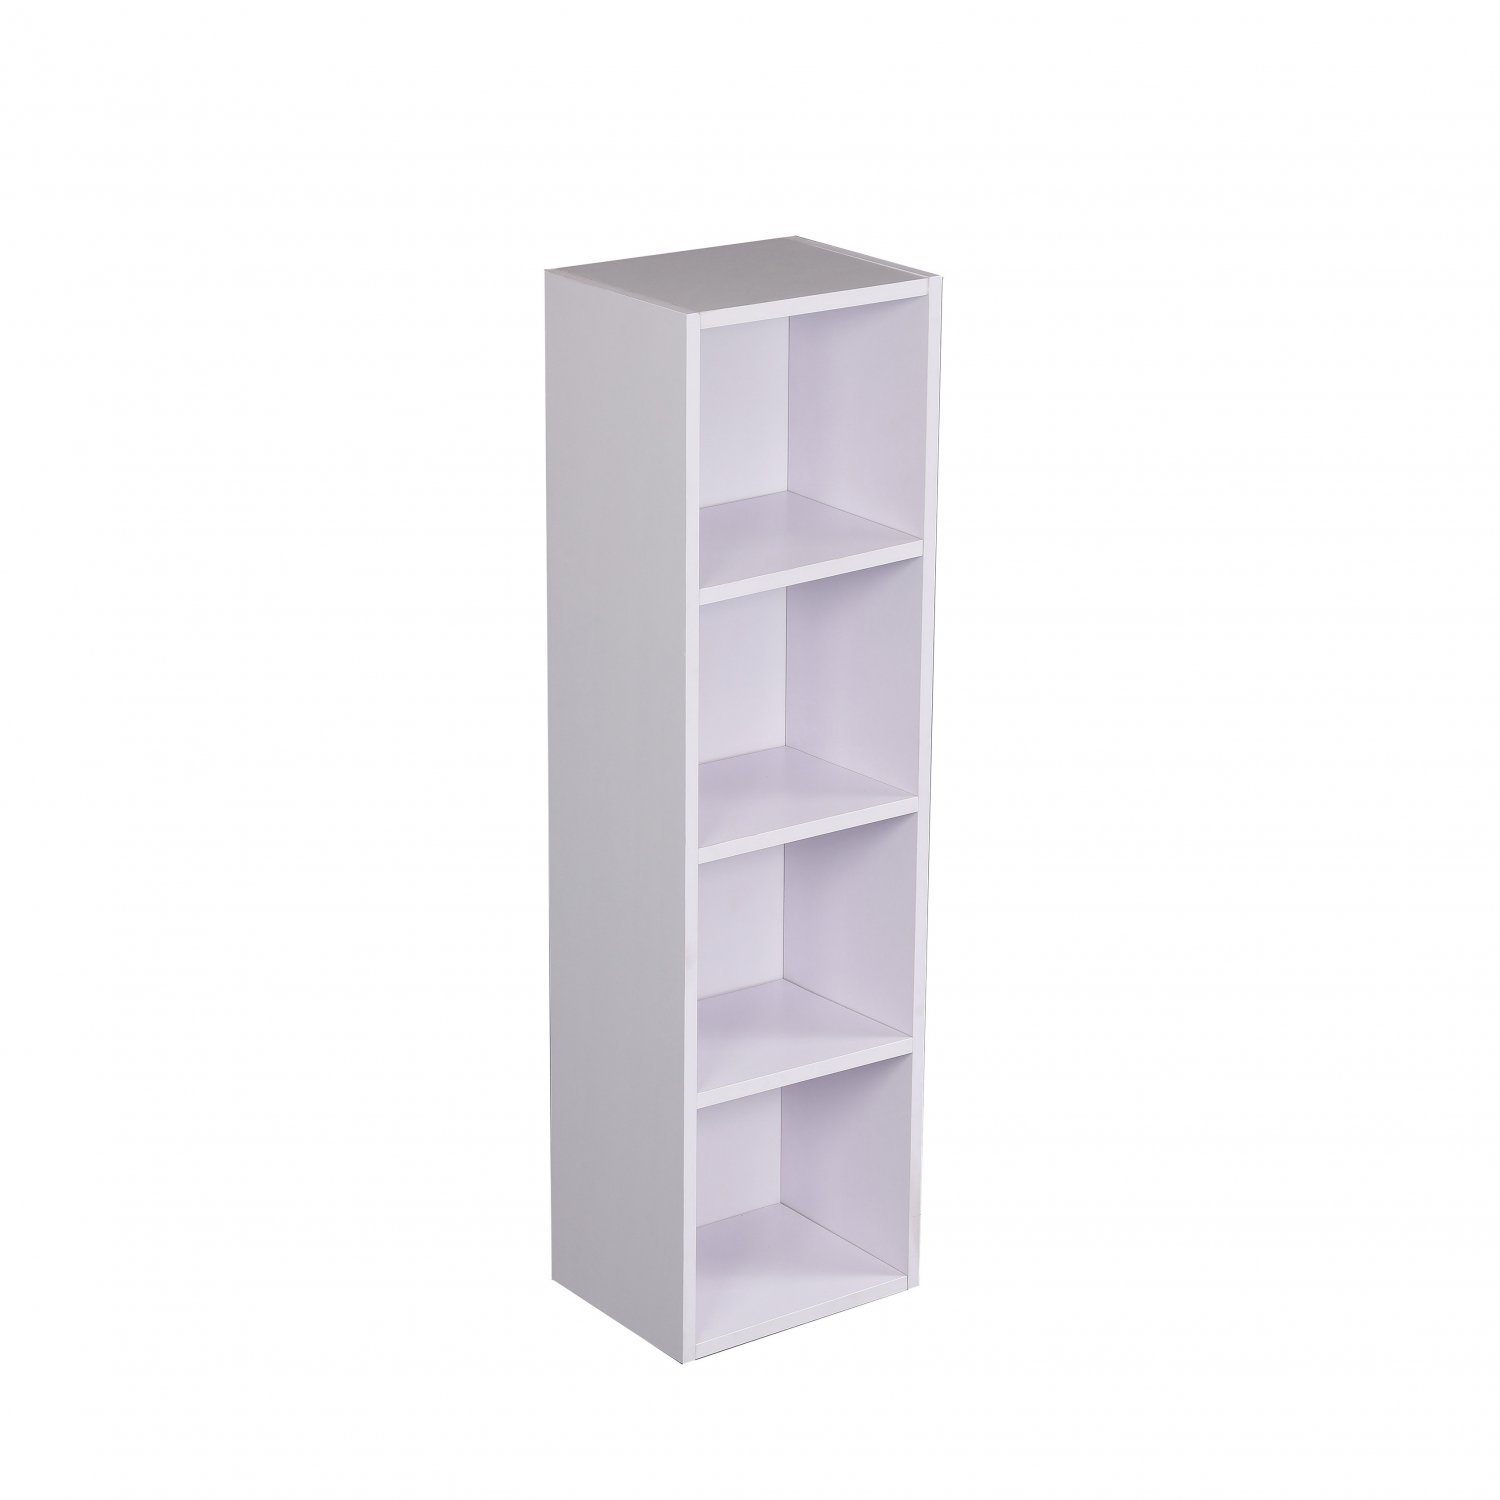 4 Tier Wooden Shelf White Bookcase, White Bookcase Shelving Unit